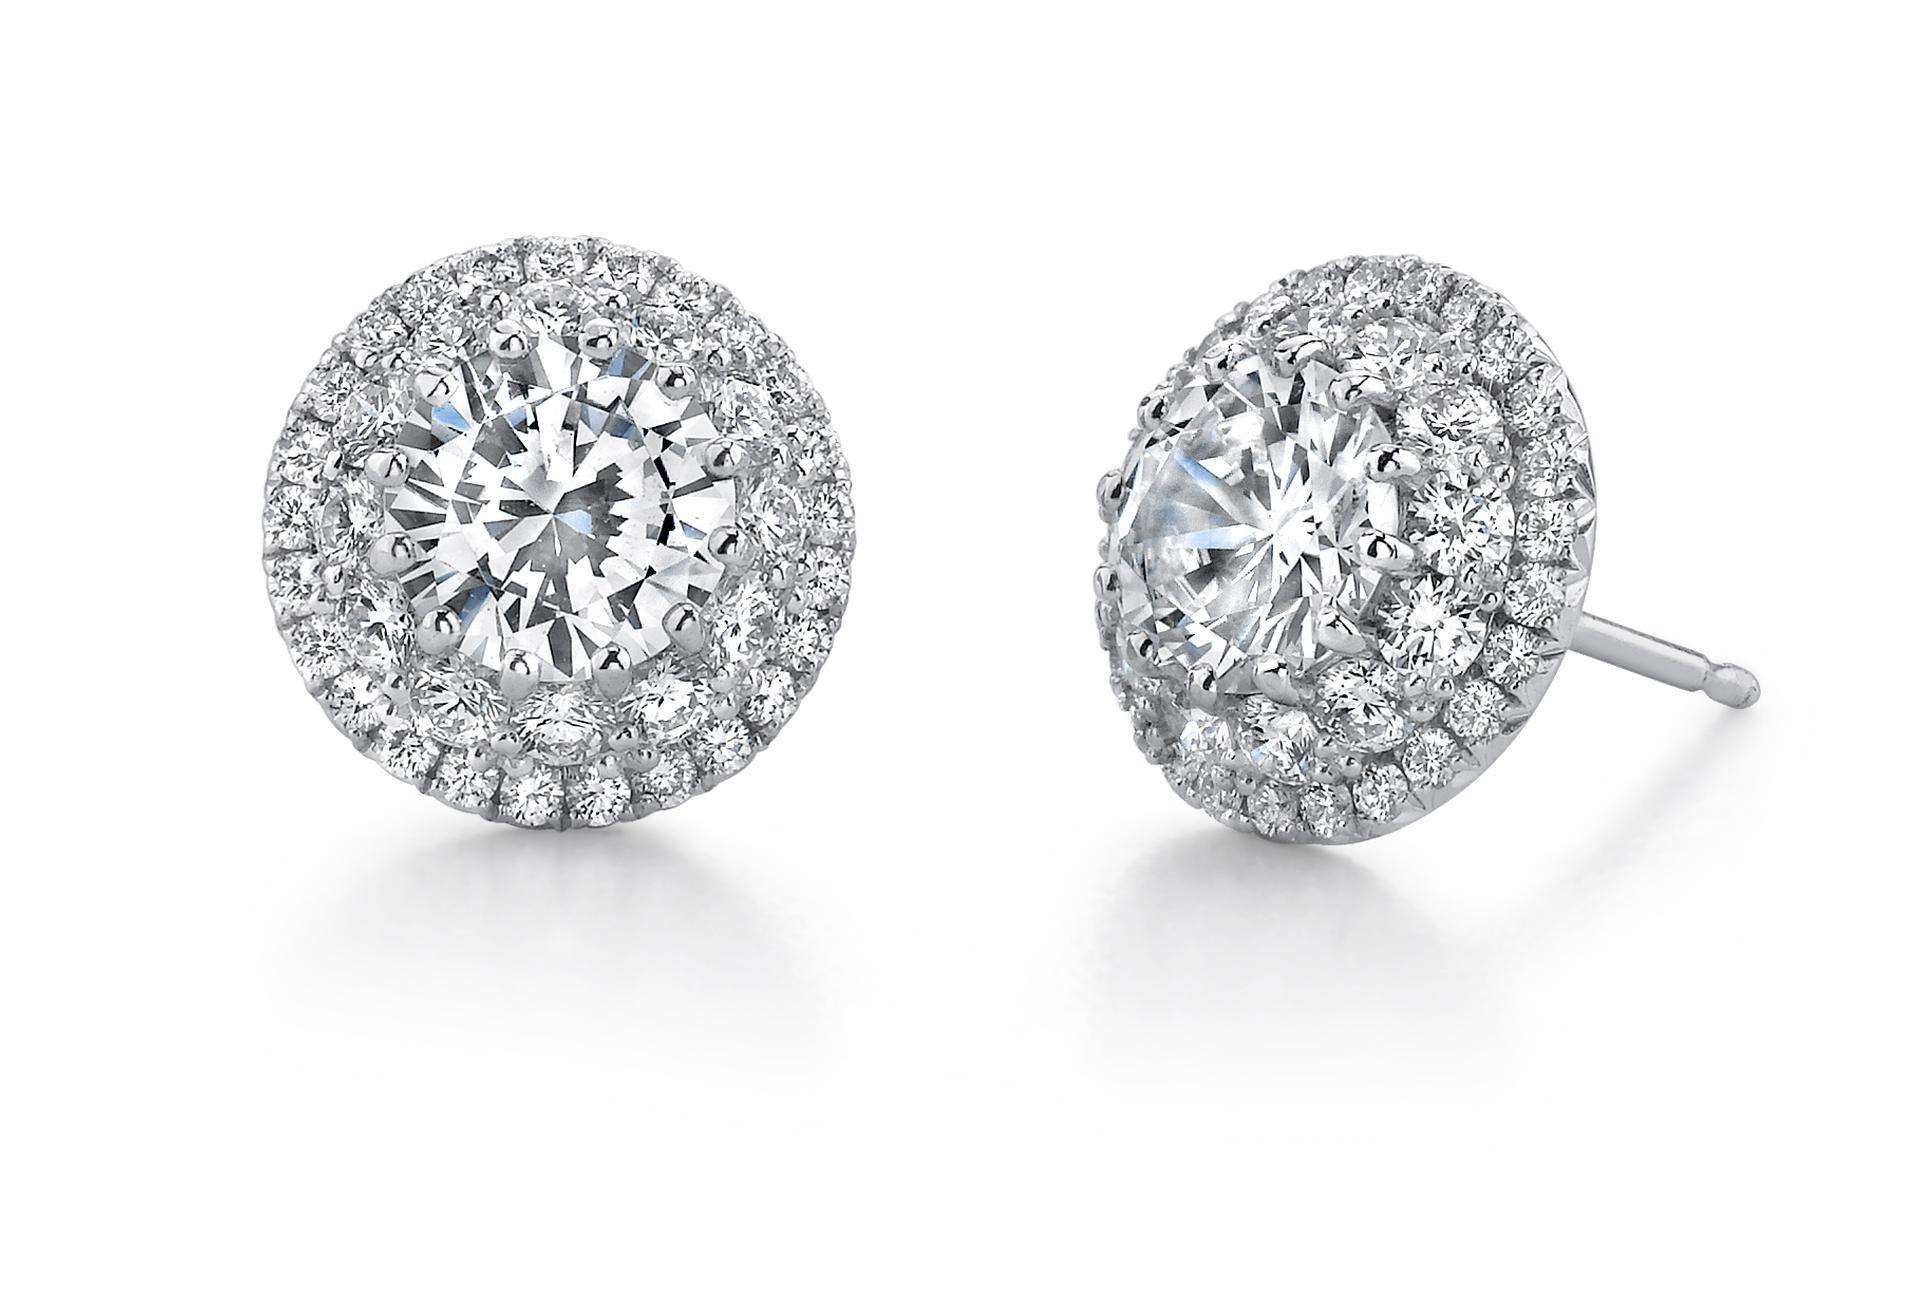 Center Stone: Each 0.50 carat x 2 
Side diamonds: 0.40 ct
Total Carat: 1.40 Carat 
Quality: F VS